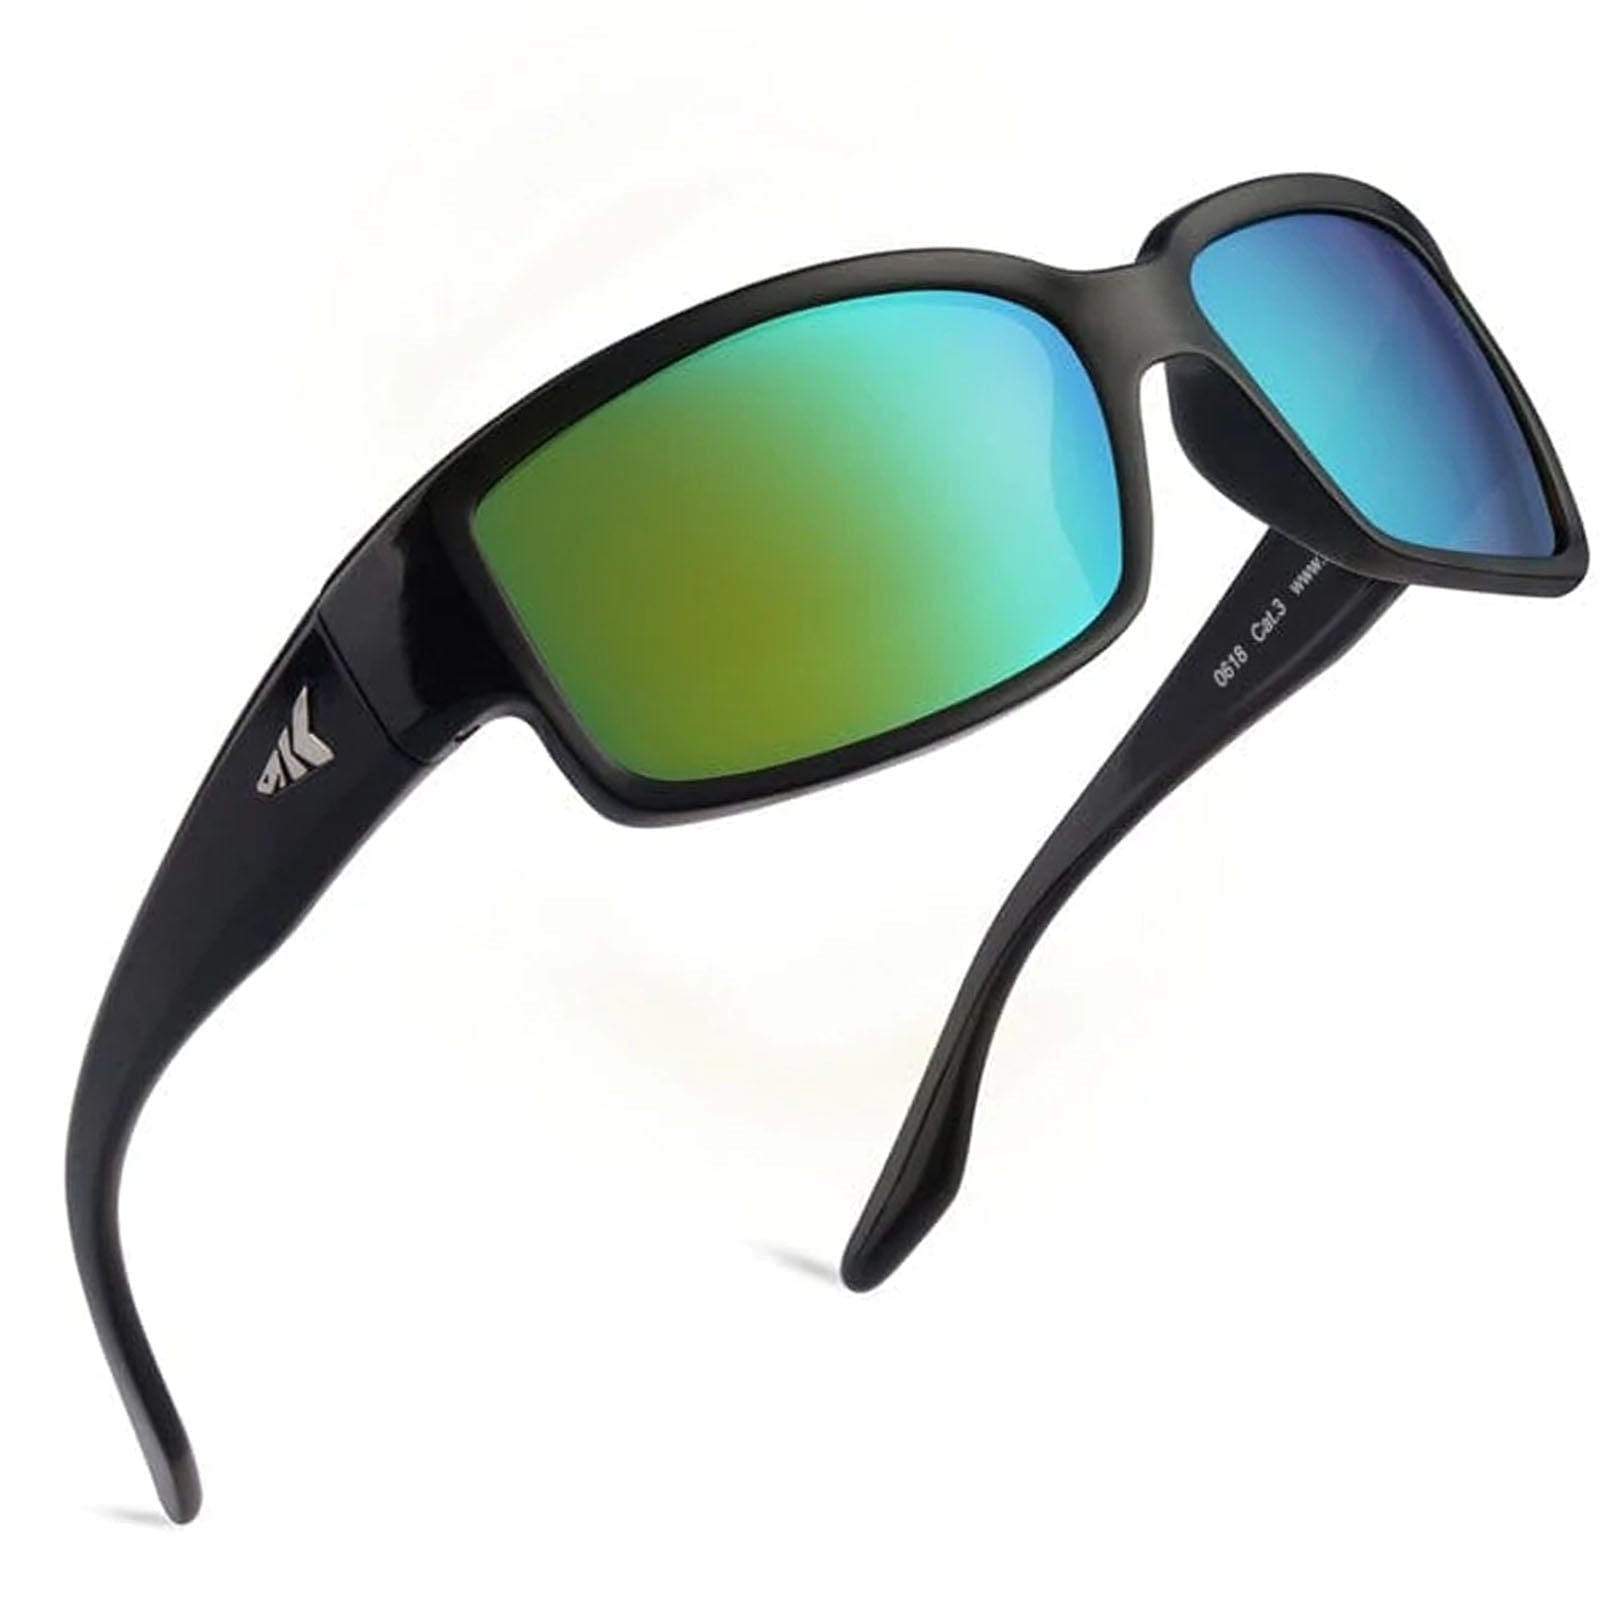 Matrix Denton Prescription Sports Sunglasses For Men and Women Black -  Cycling, Running and Baseball Glasses